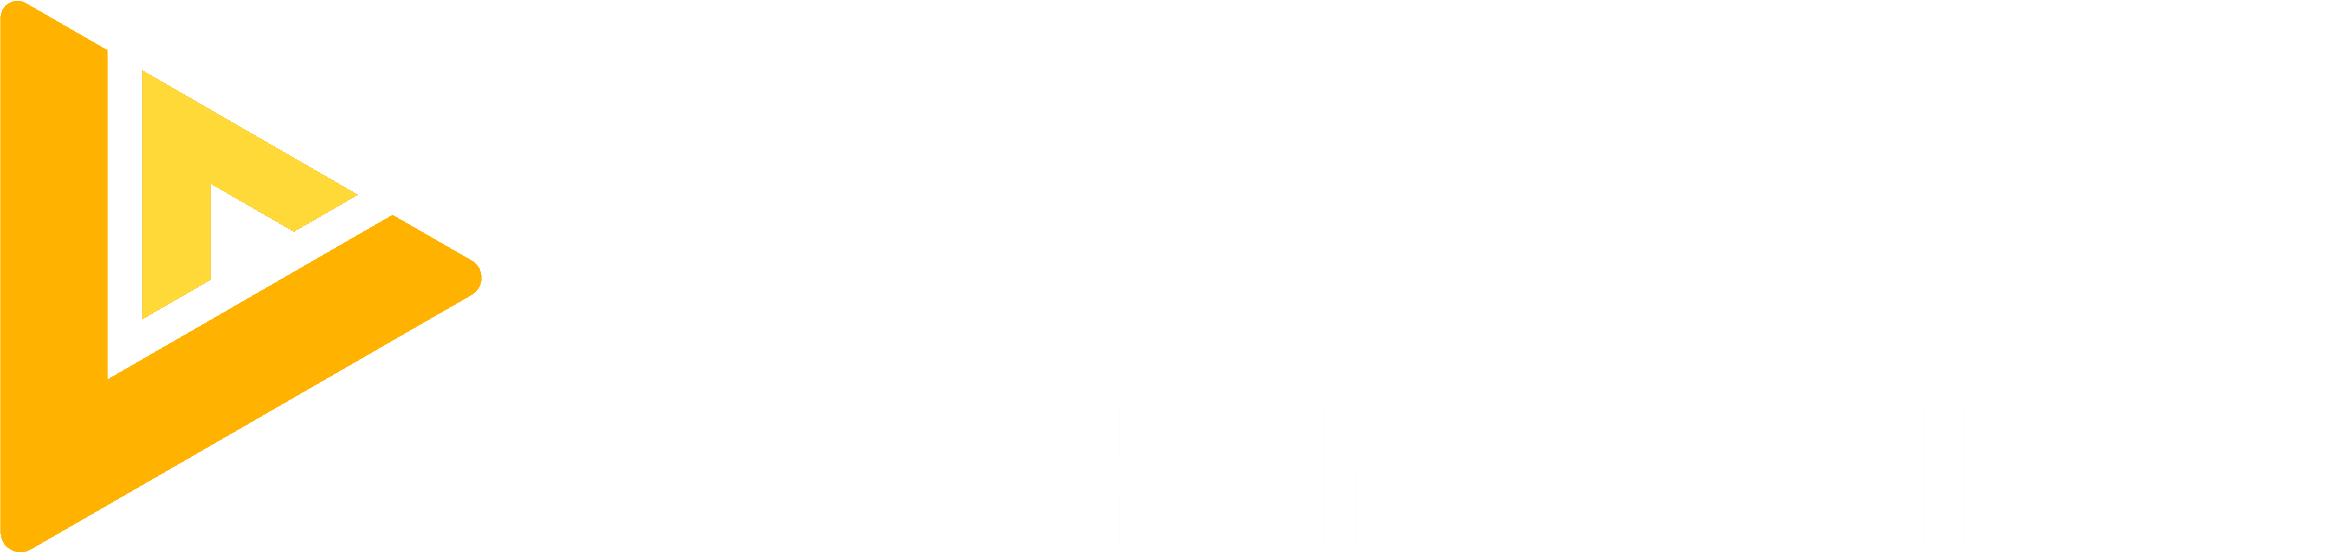 Jonathan La FIlms logo